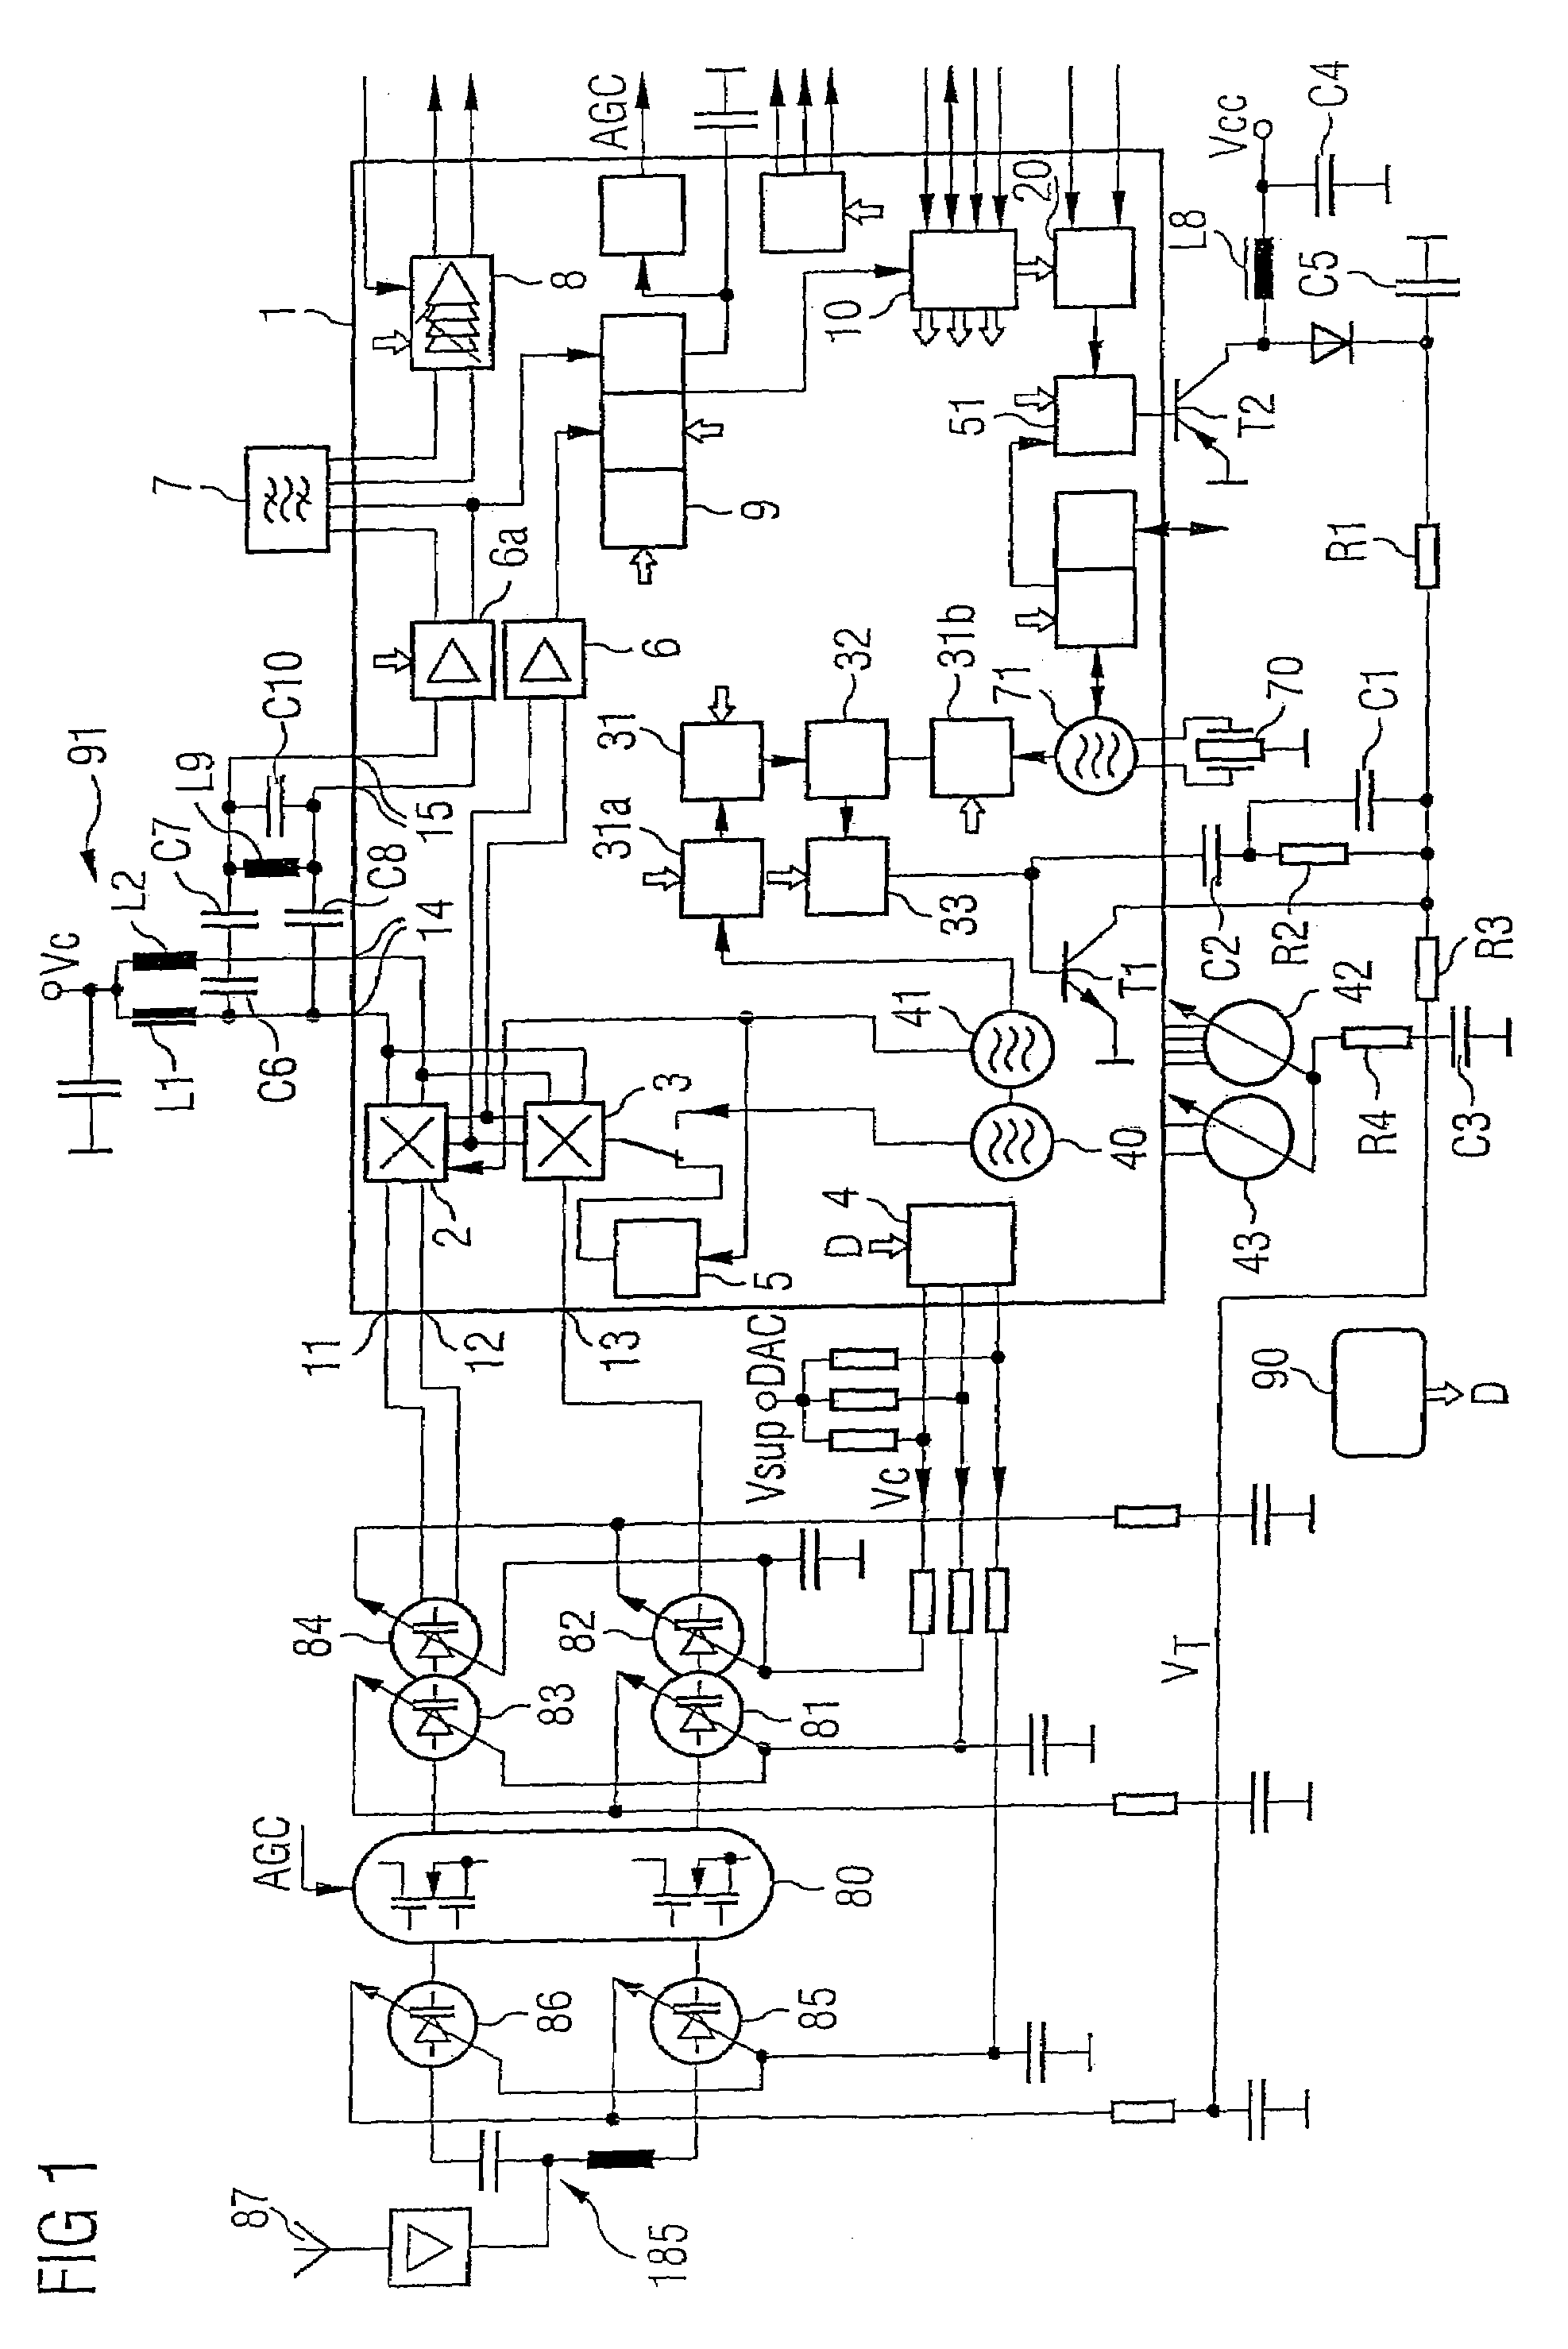 Integrated circuit television receiver arrangement